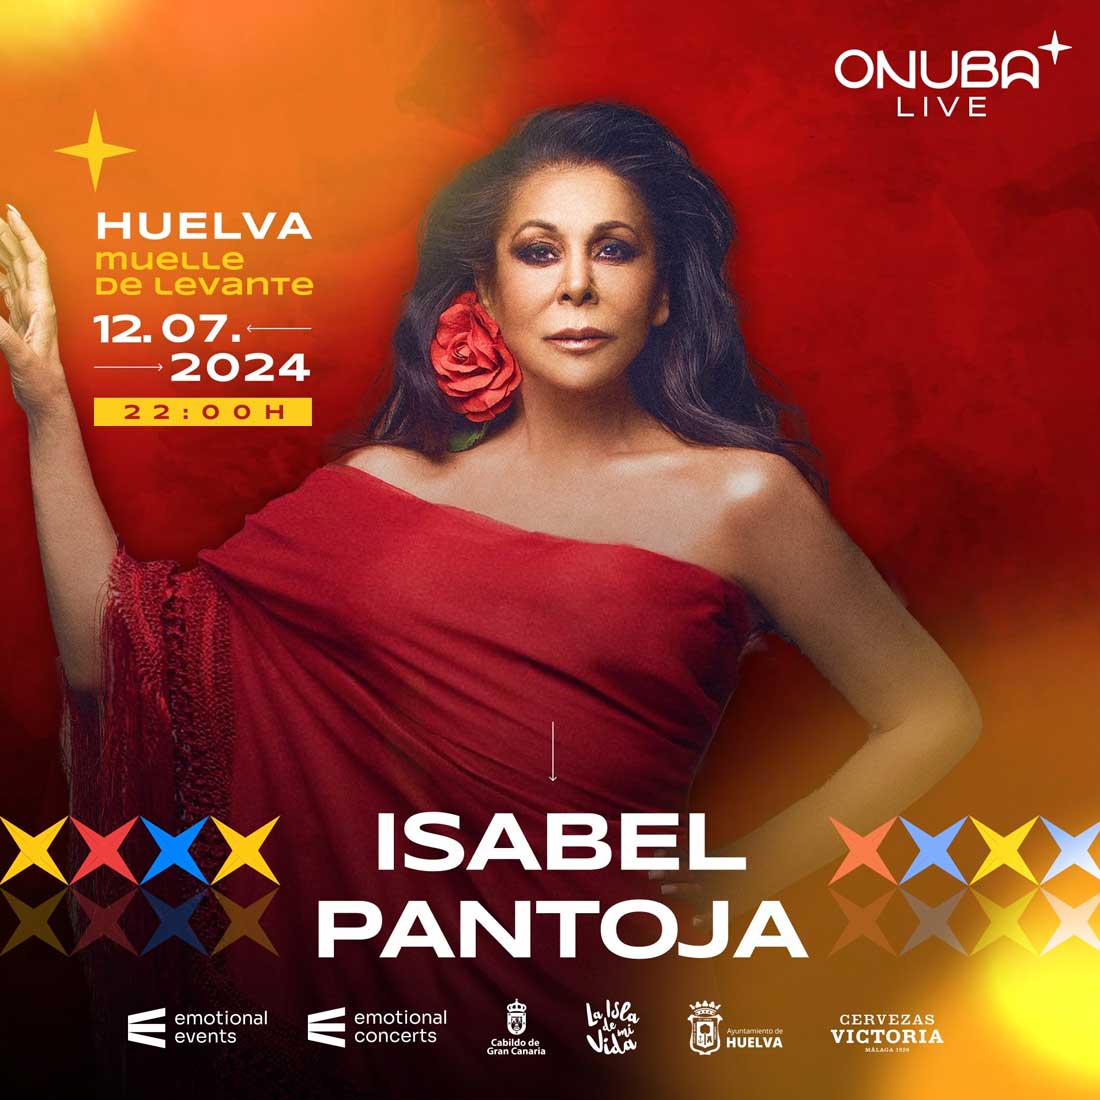 Isabel Pantoja en Huelva 12 de julio dfe 2024 Festival Onuba Live 2024 muelle de levante